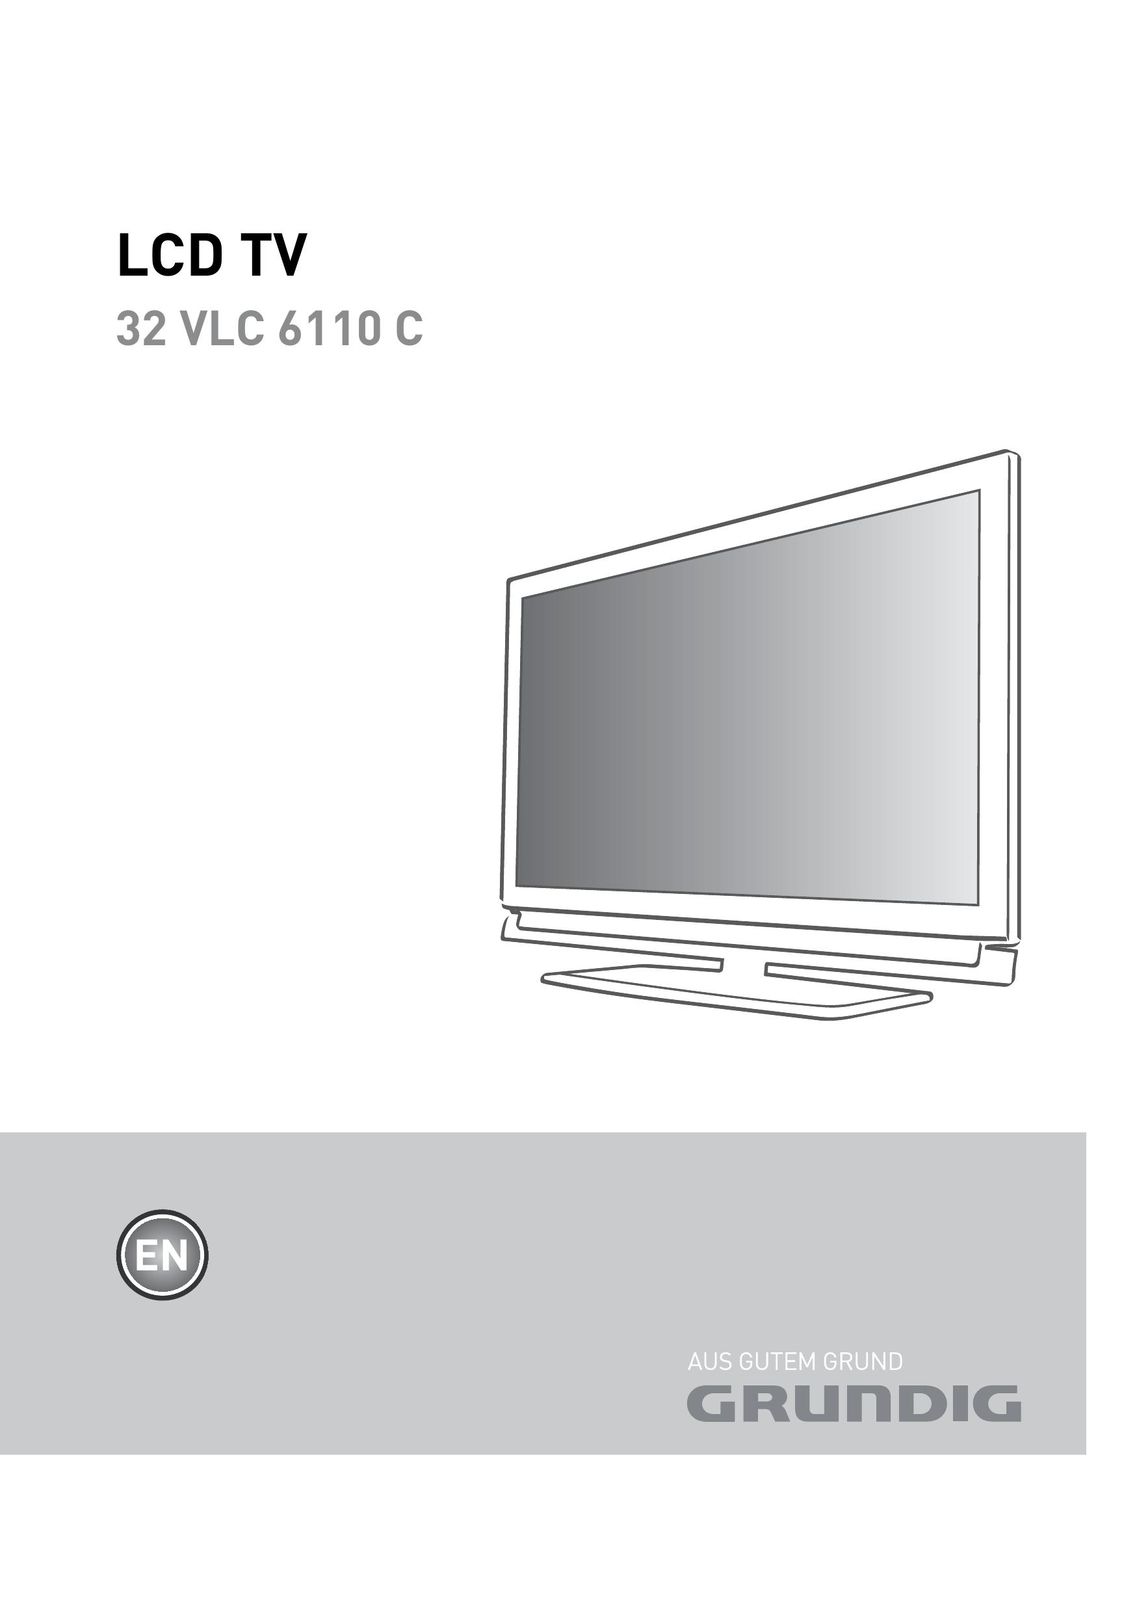 Grundig 32 VLC 6110 C Flat Panel Television User Manual